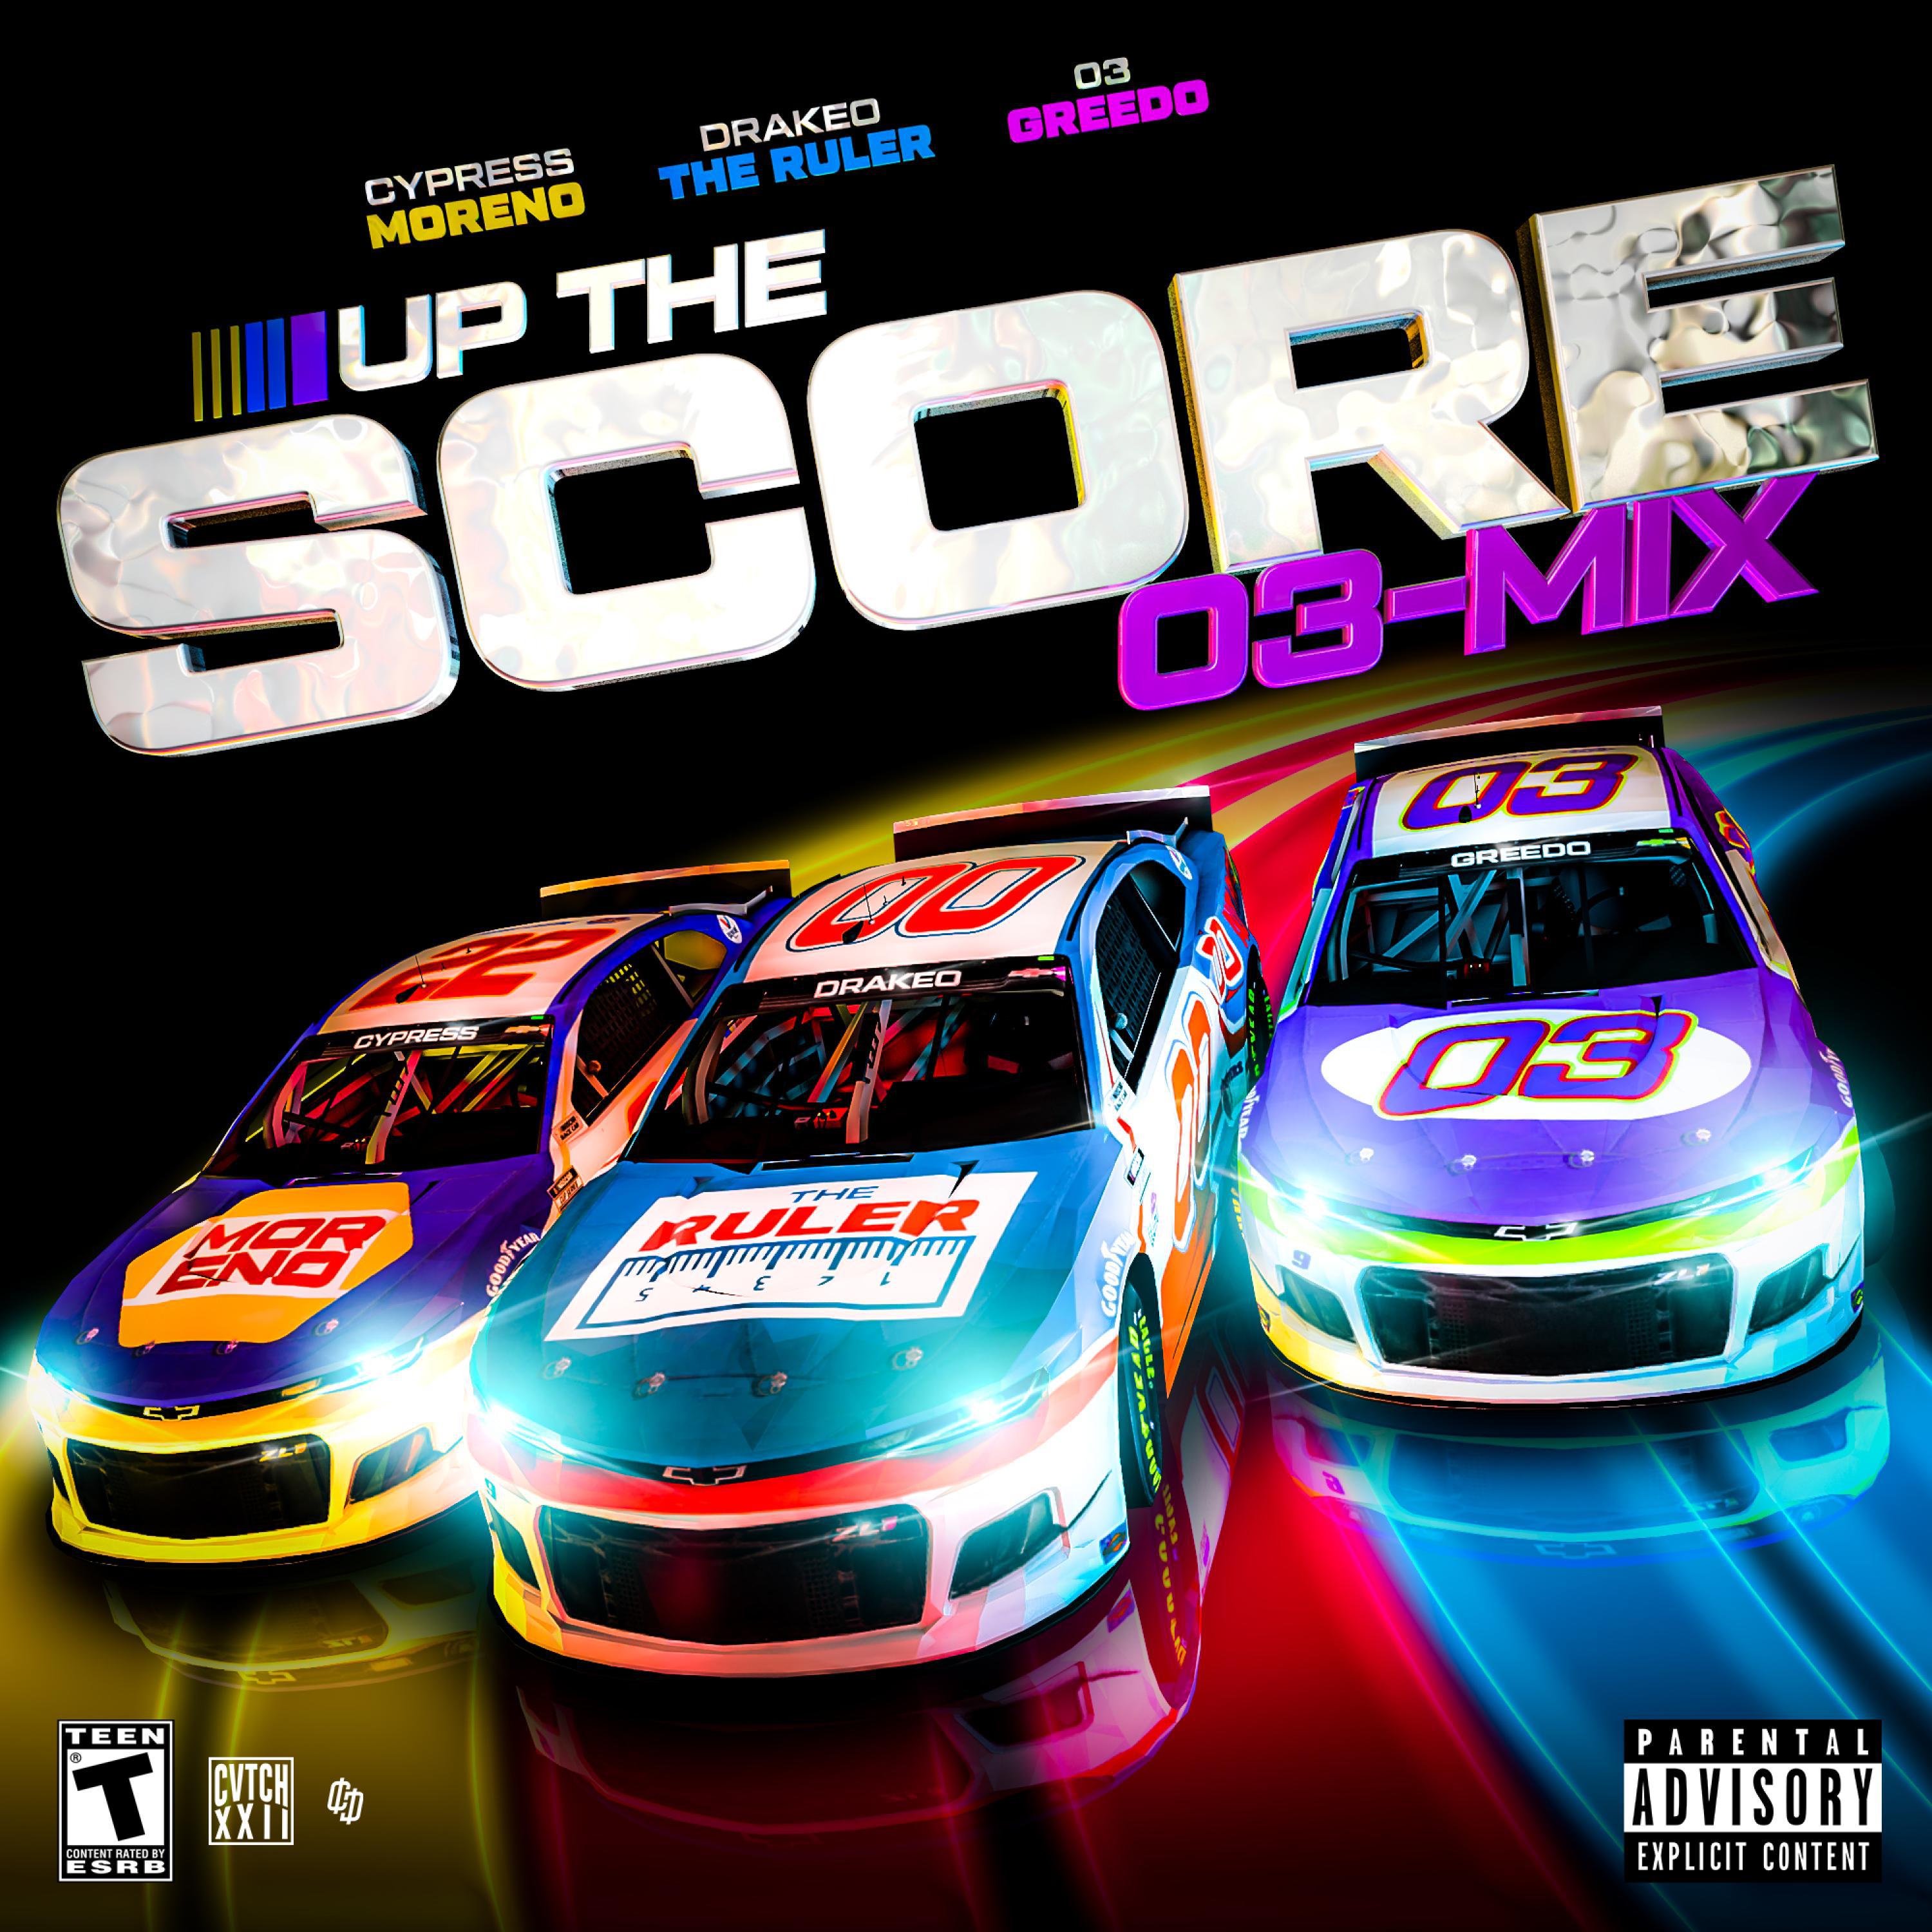 Cypress Moreno - Up The Score (feat. 03 Greedo) (03-Mix)